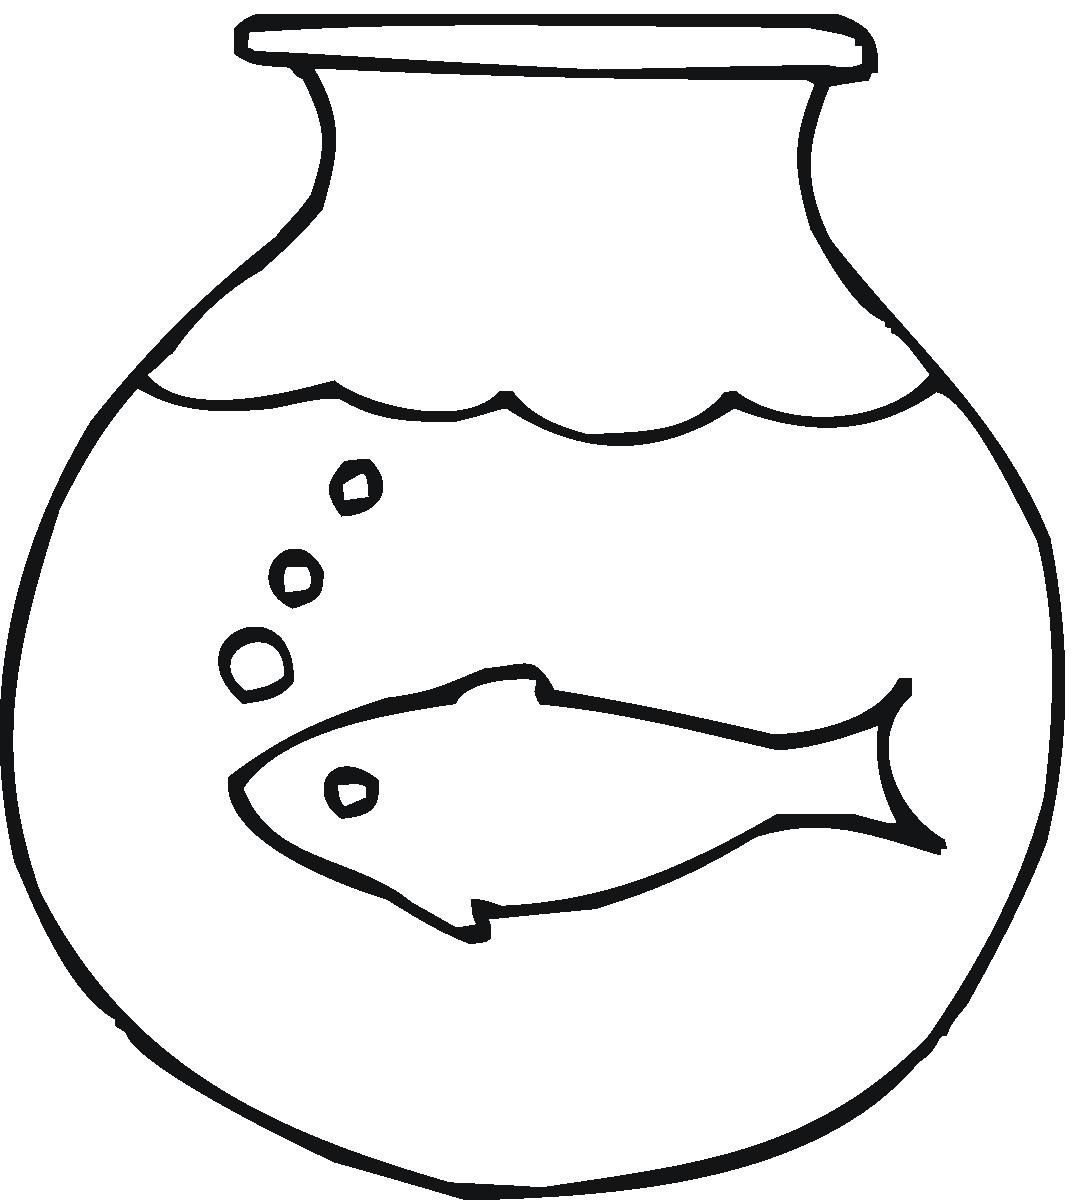 Fish Bowl clipart #5, Download drawings